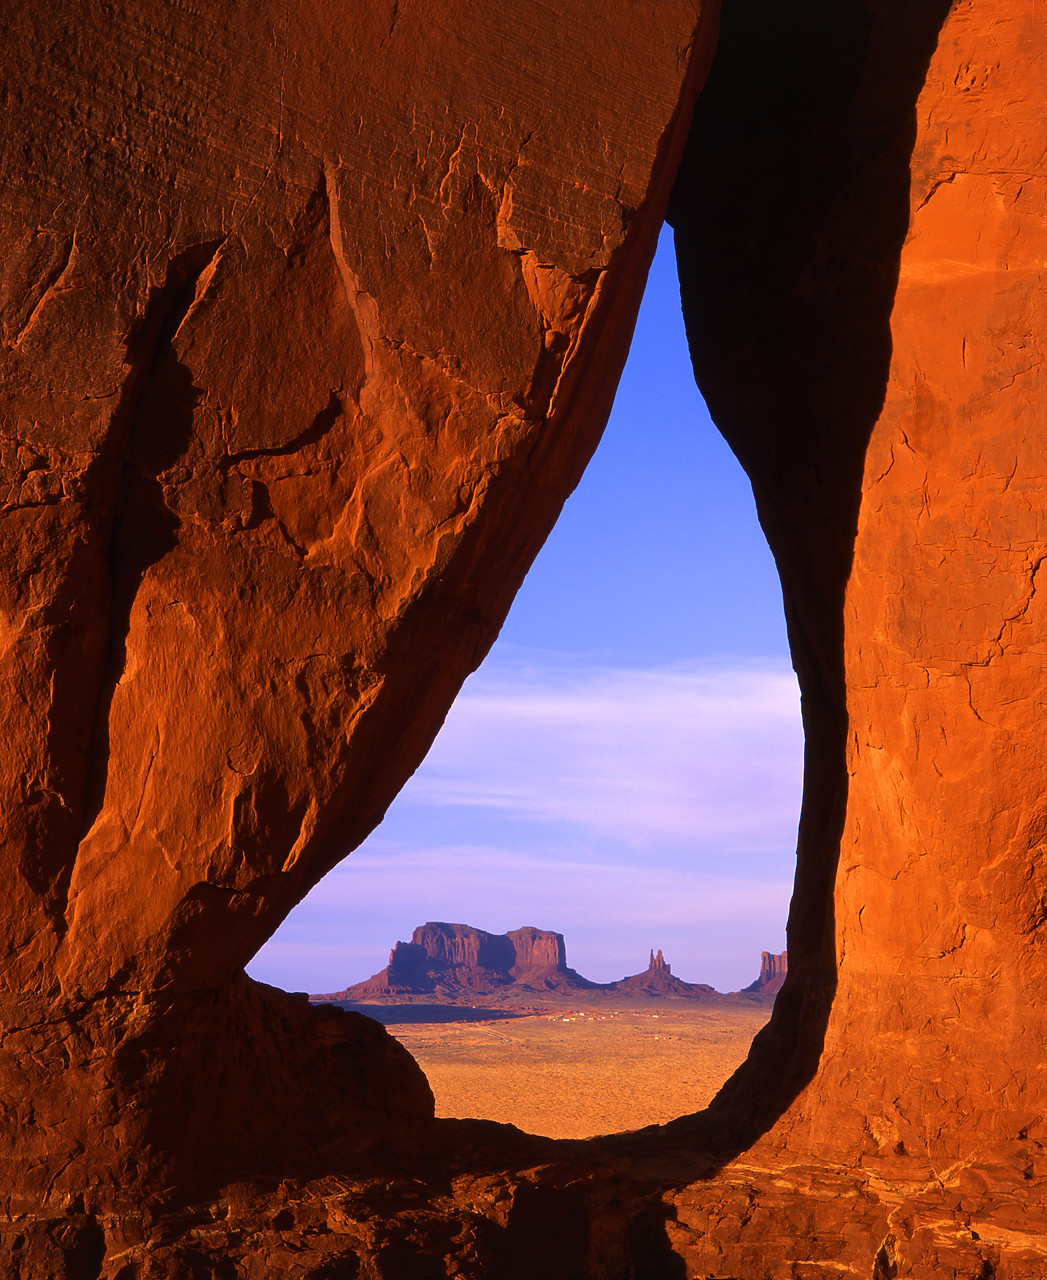 #020212-1 - Tear Drop Arch, Monument Valley Tribal Park, Arizona, USA